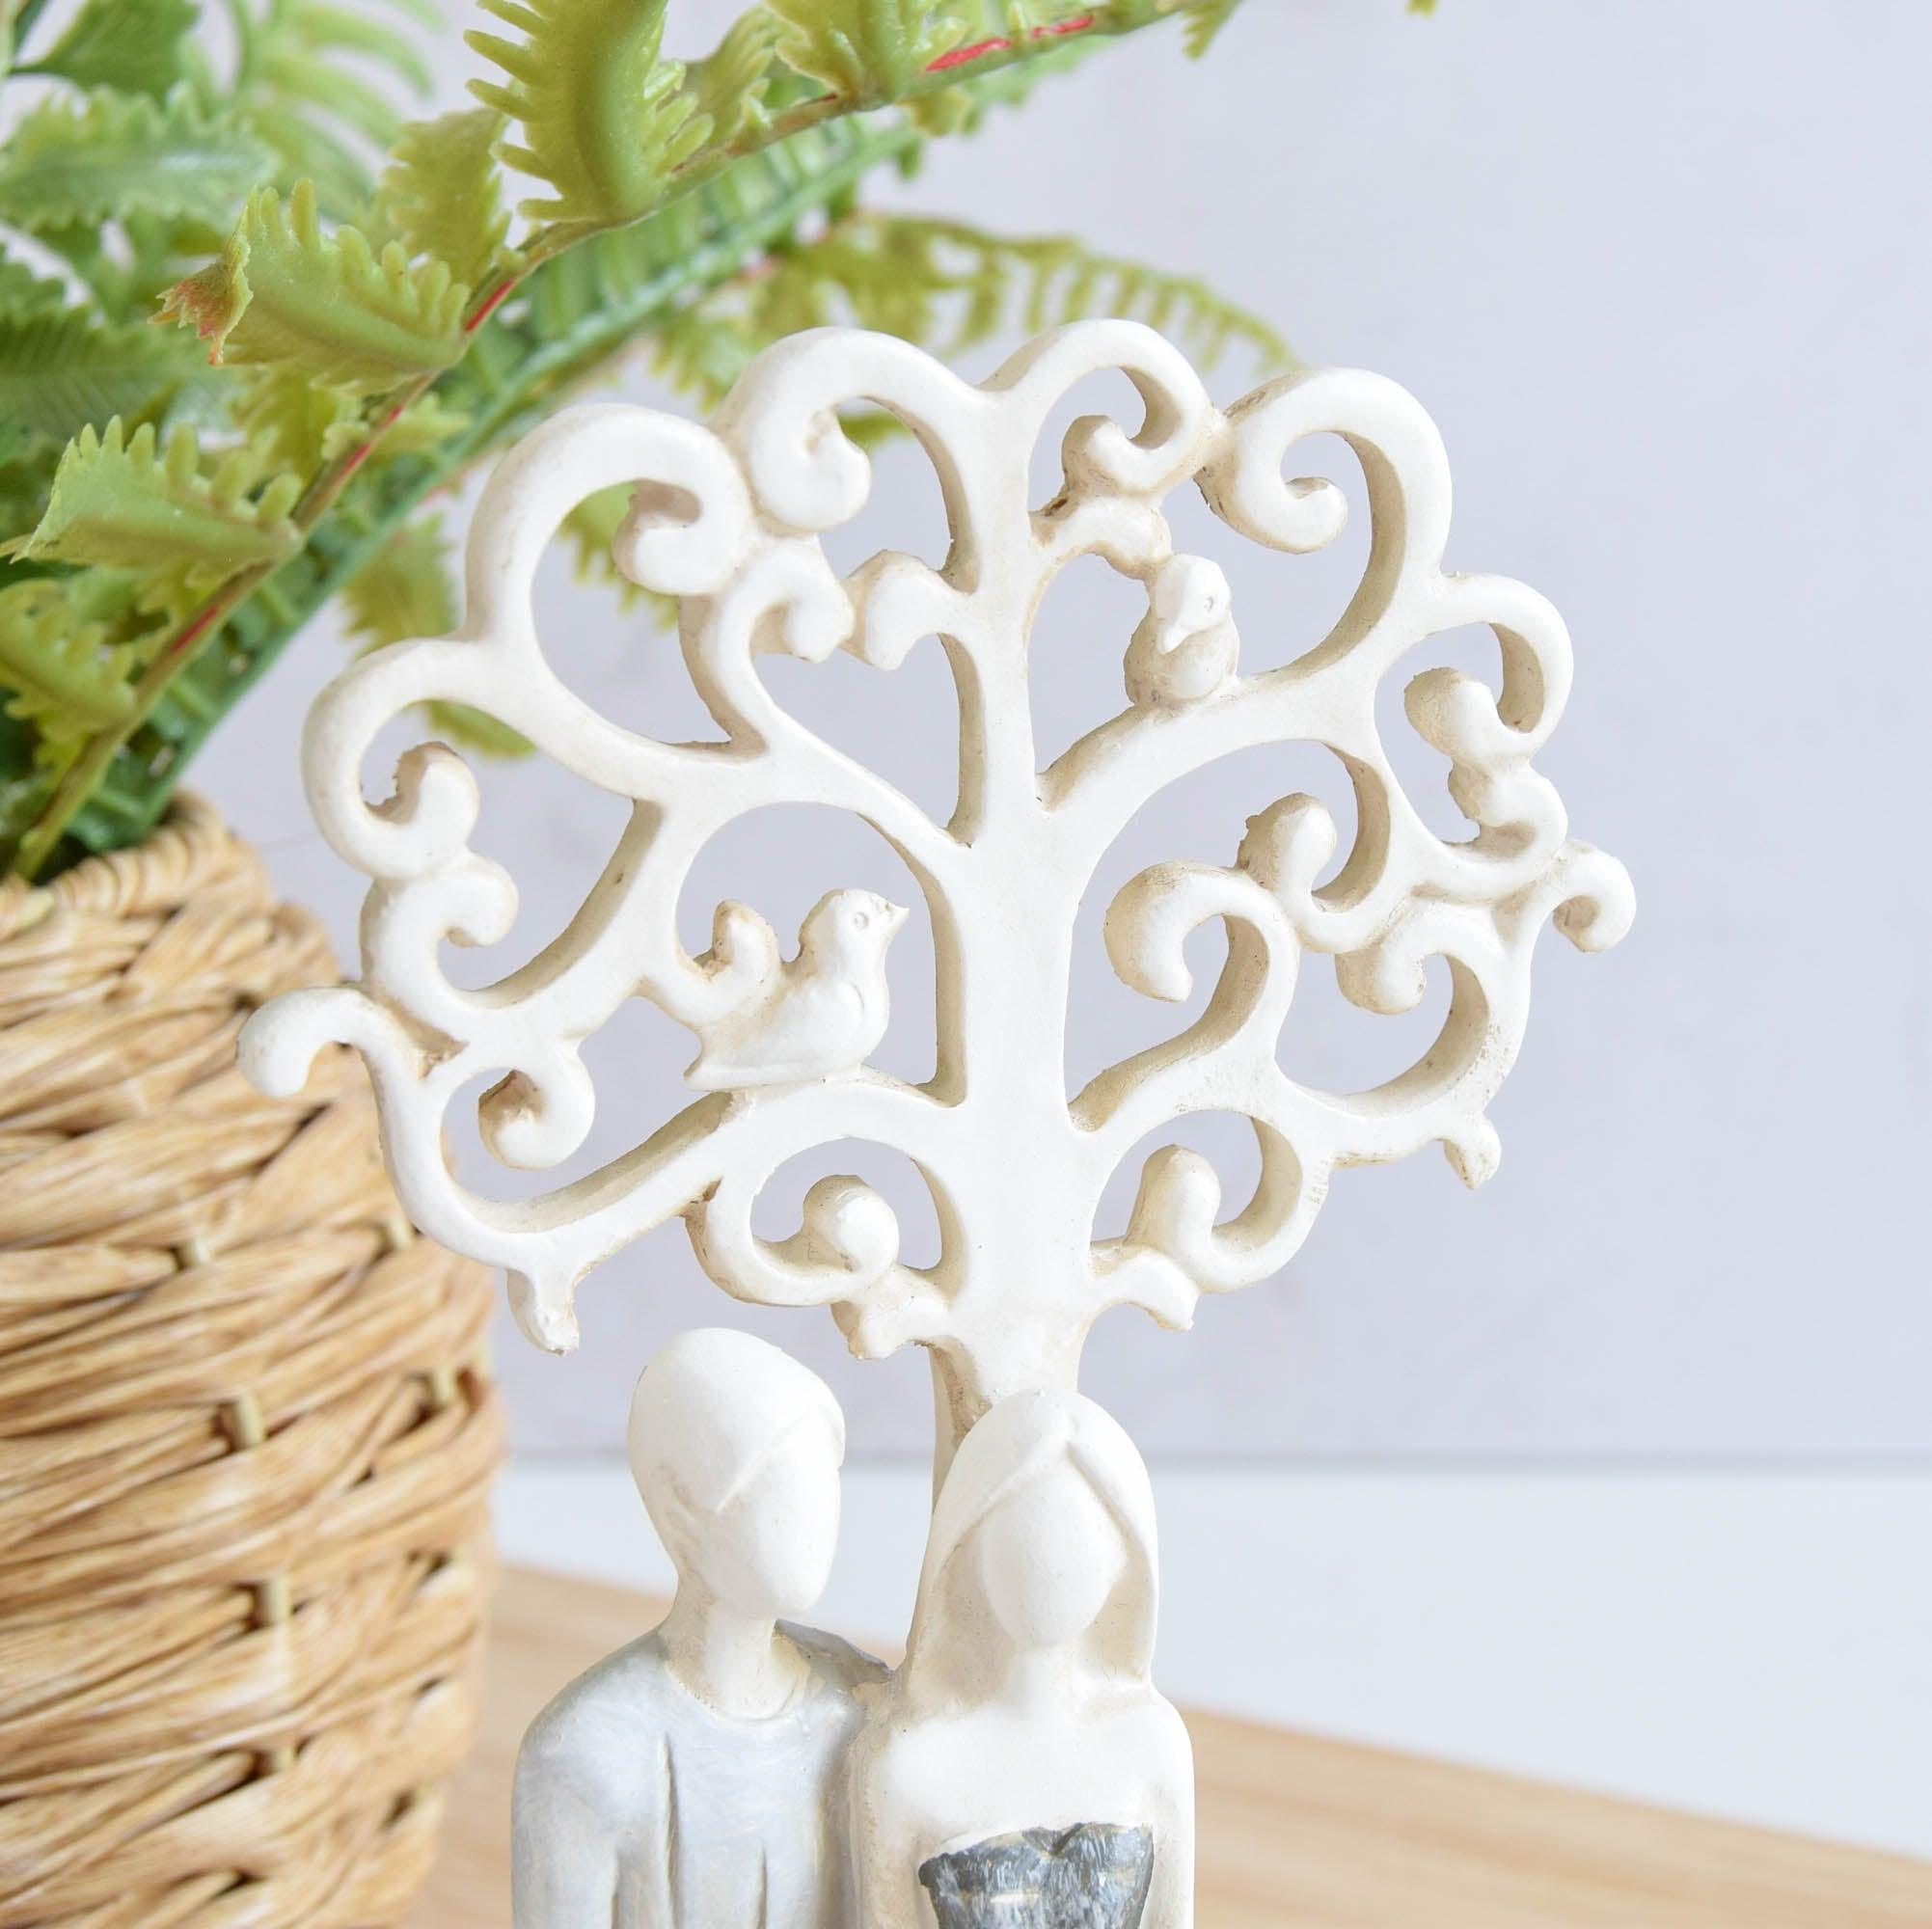 Family Tree Couple Figurine -  Picture Perfect Interiors